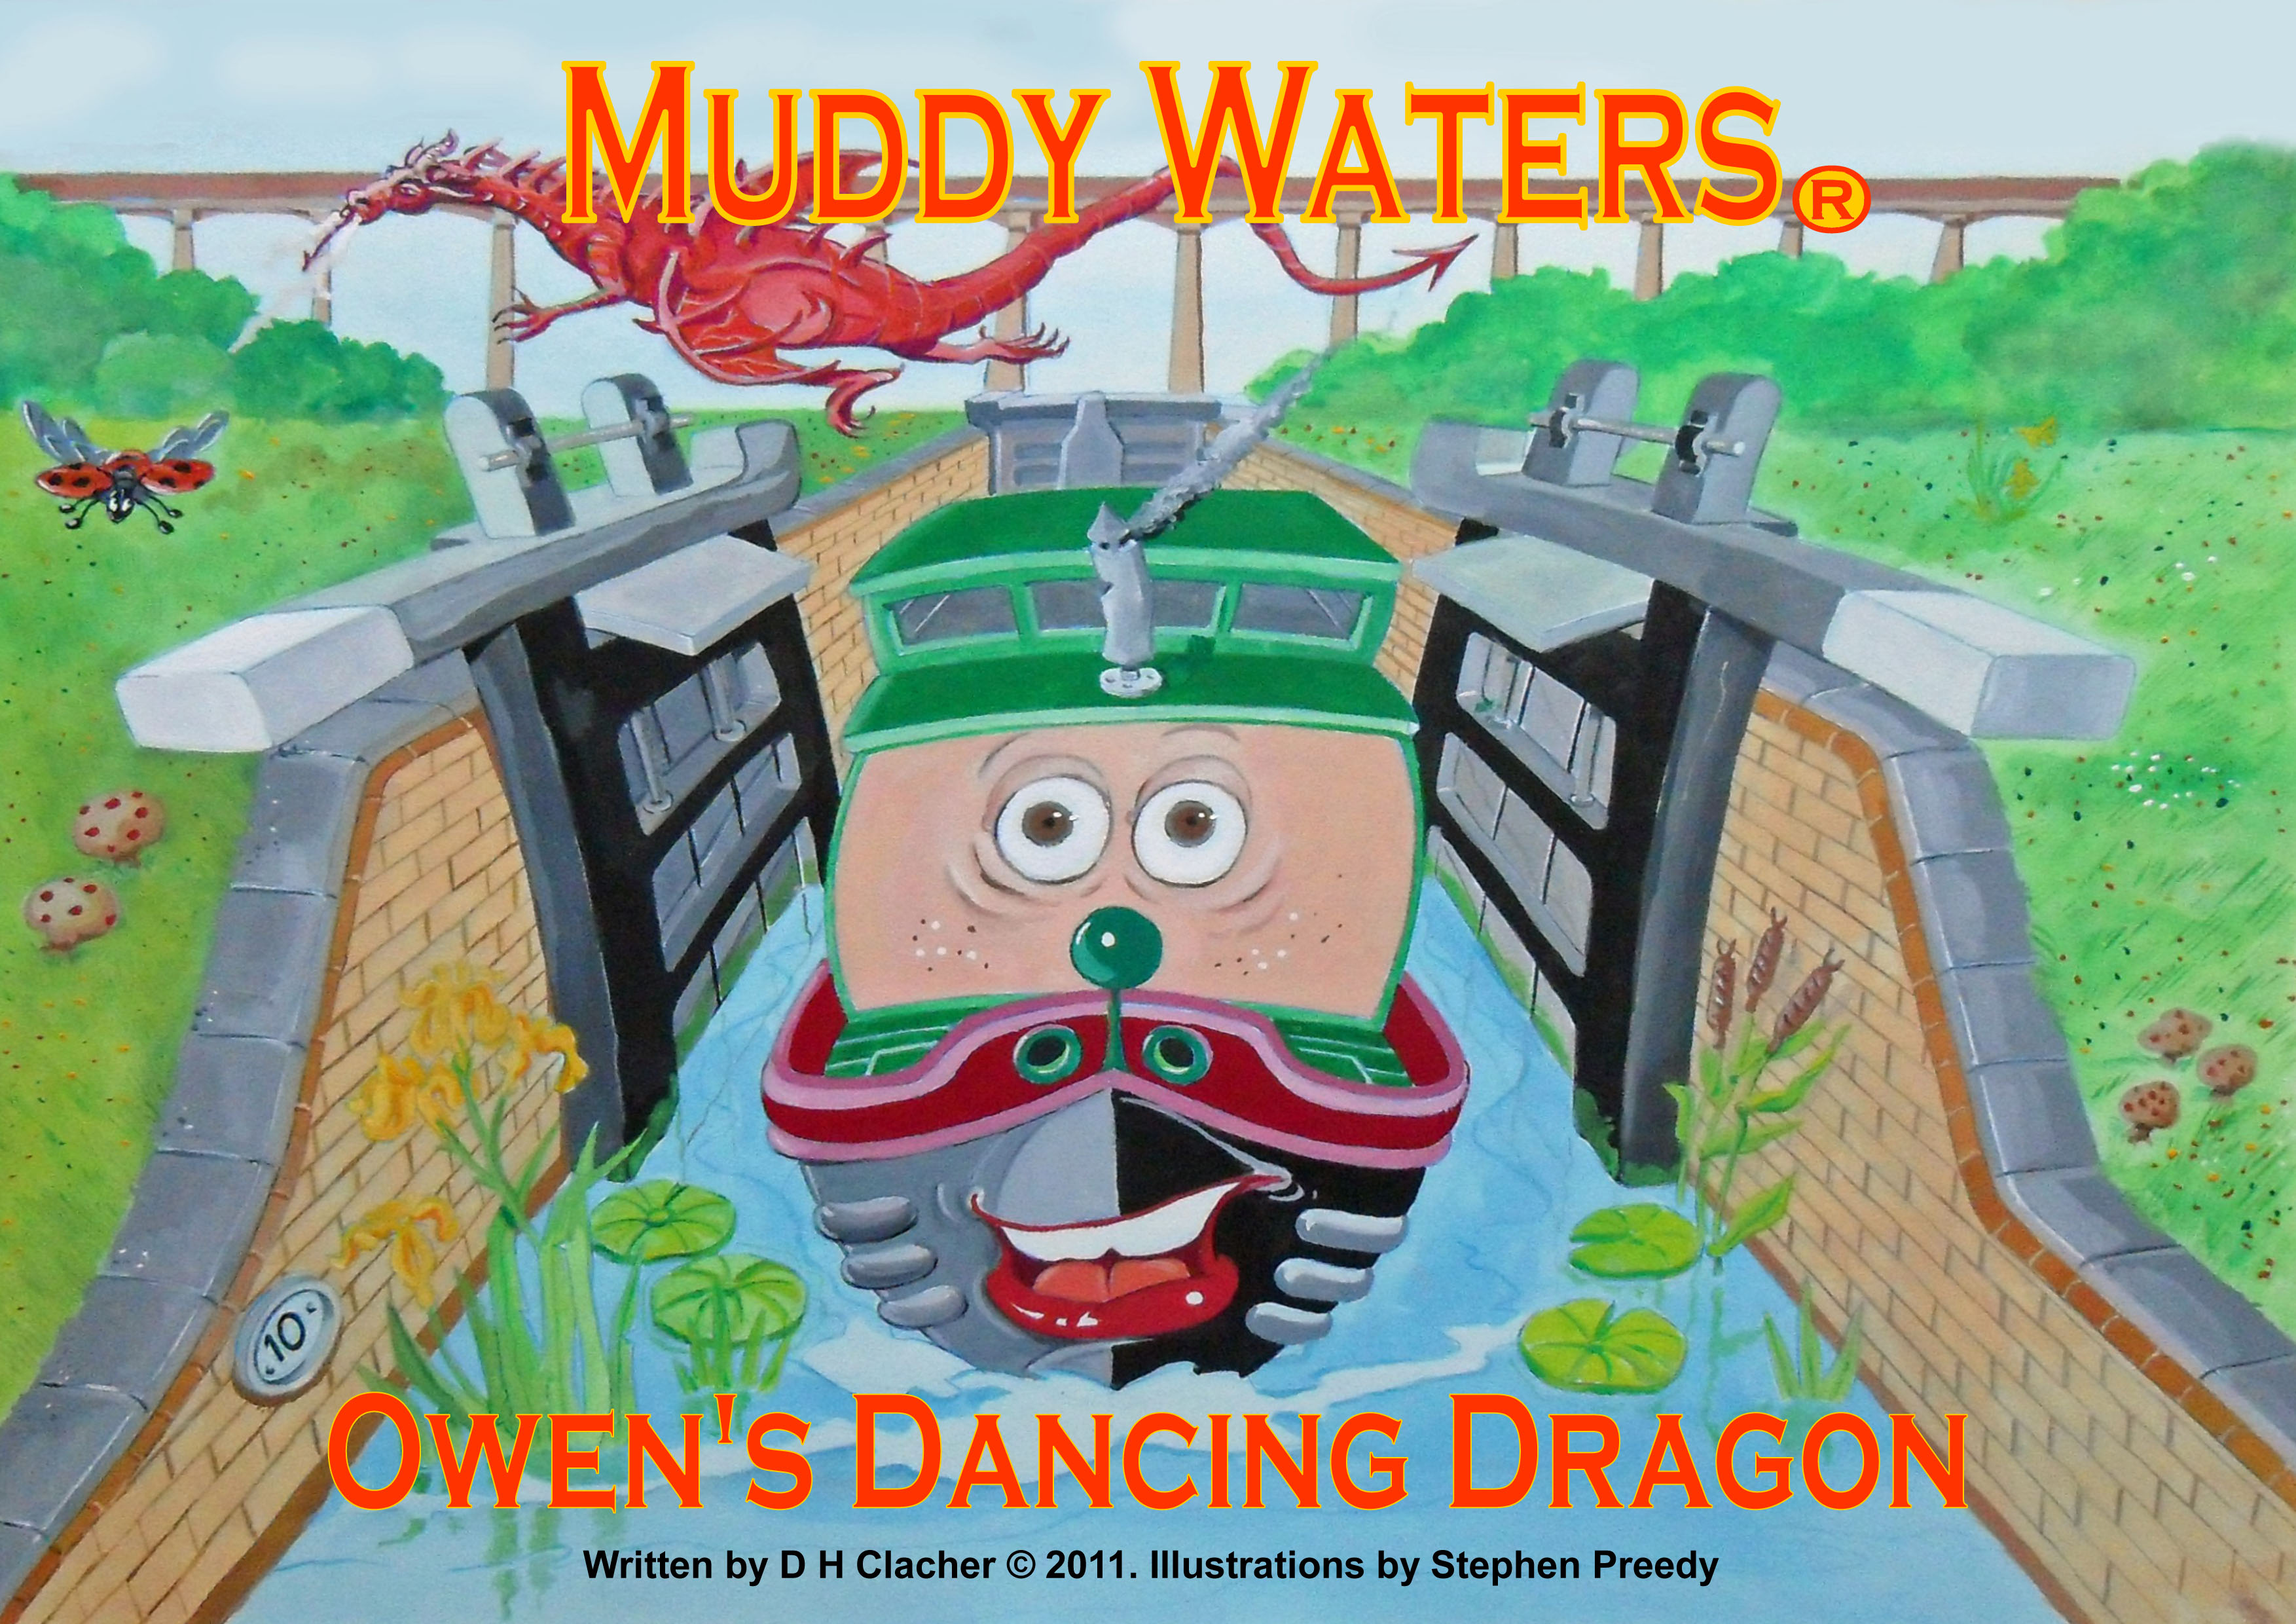 Owen's Dancing Dragon